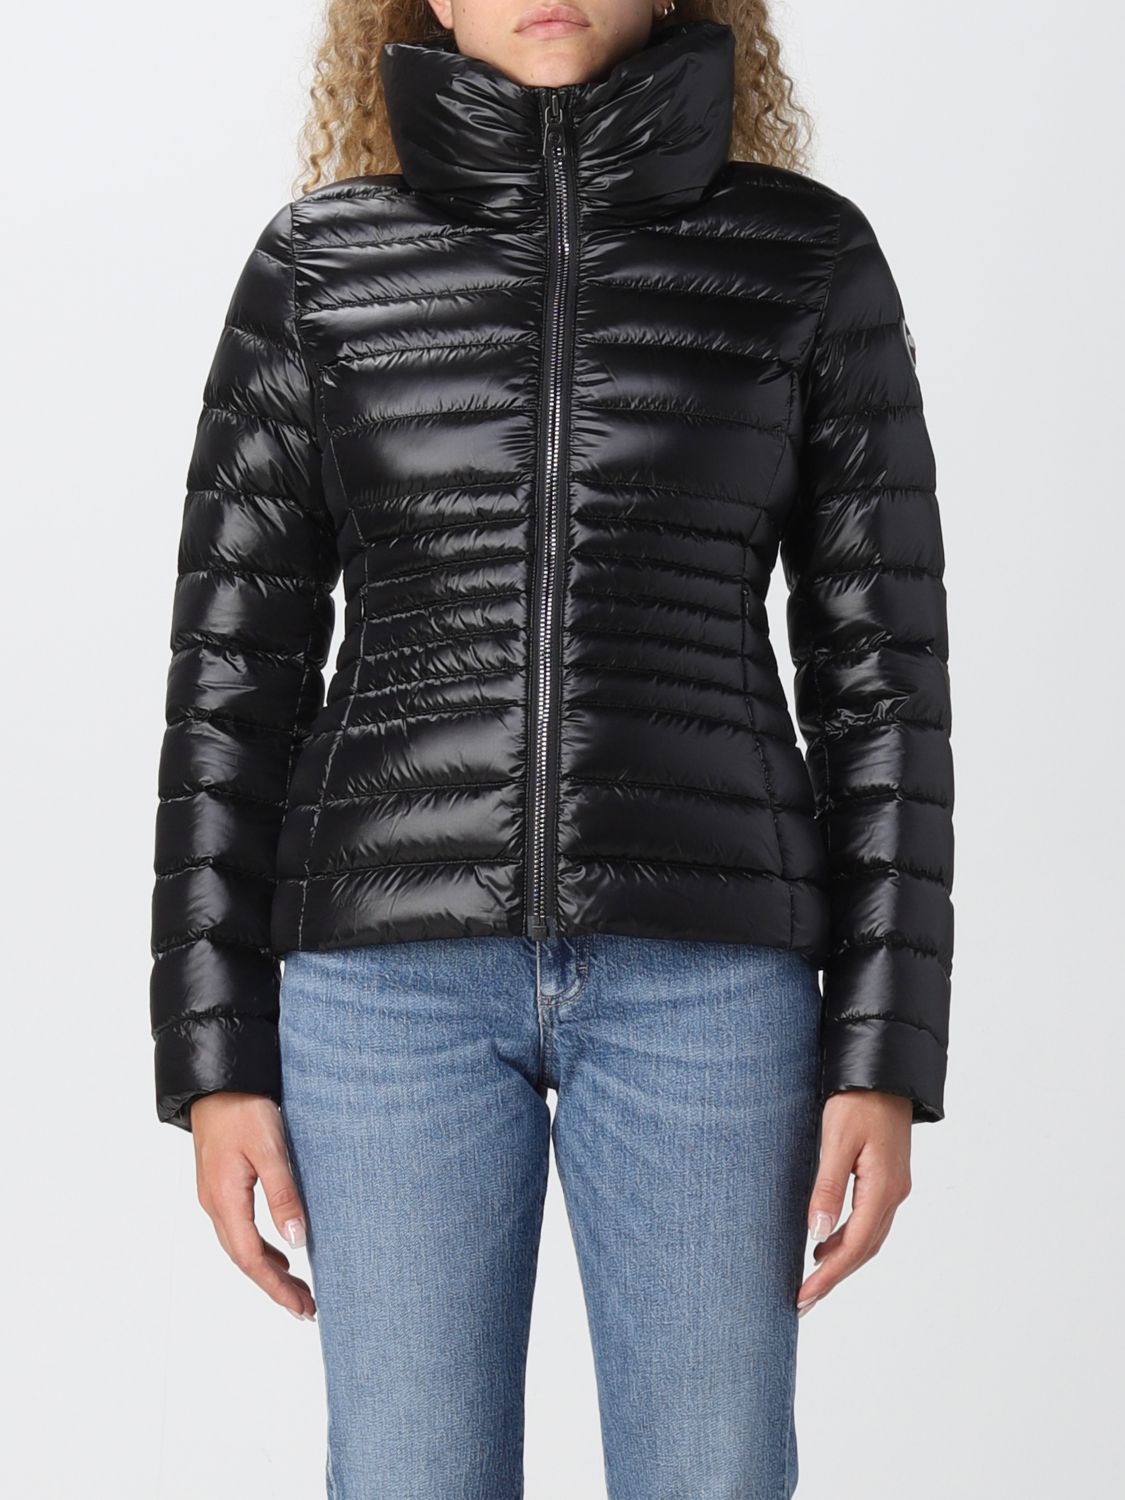 maagd Impasse zak COLMAR: jacket for woman - Black | Colmar jacket 2253R5WG online on  GIGLIO.COM